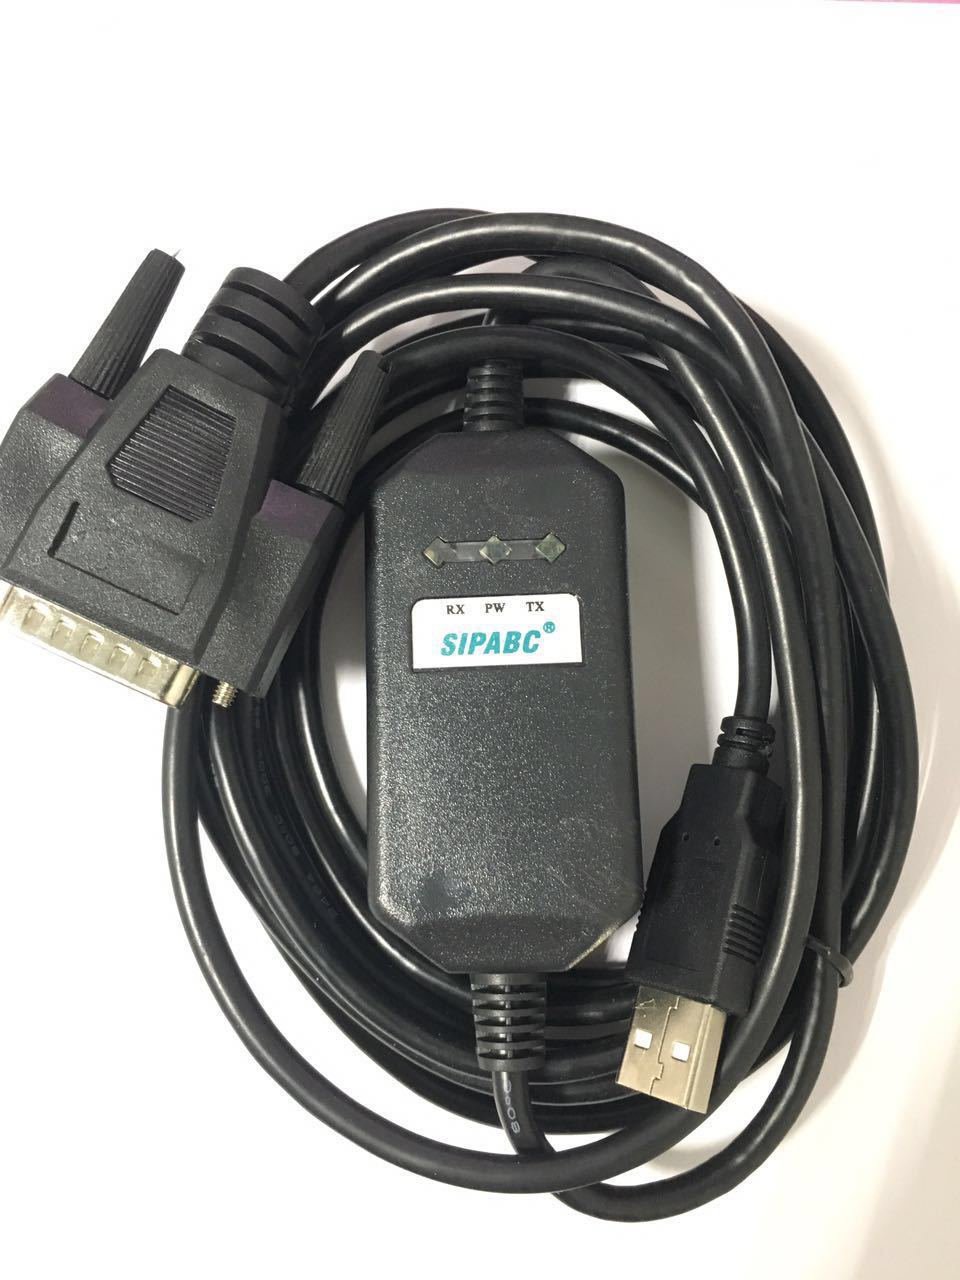 USB-FP3/FP5,USB-AFP8550 Programming Cable for Panasonic Nais FP3/FP5 PLC